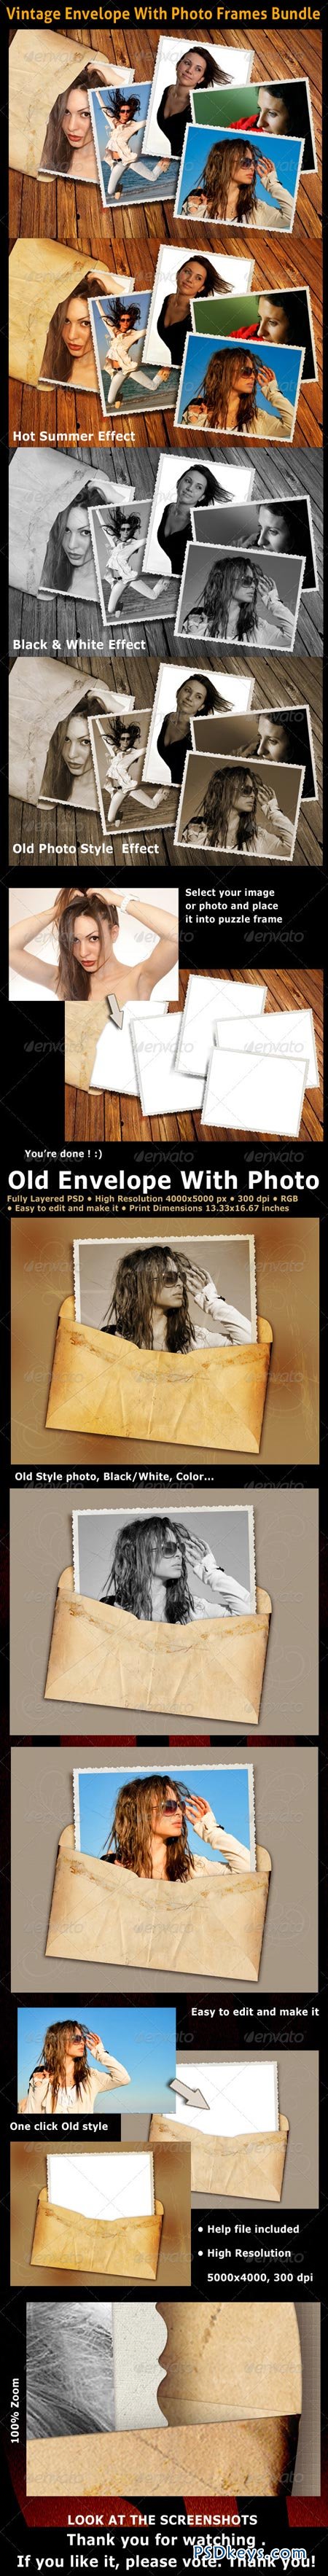 Vintage Envelope Photo Bundle 3399070